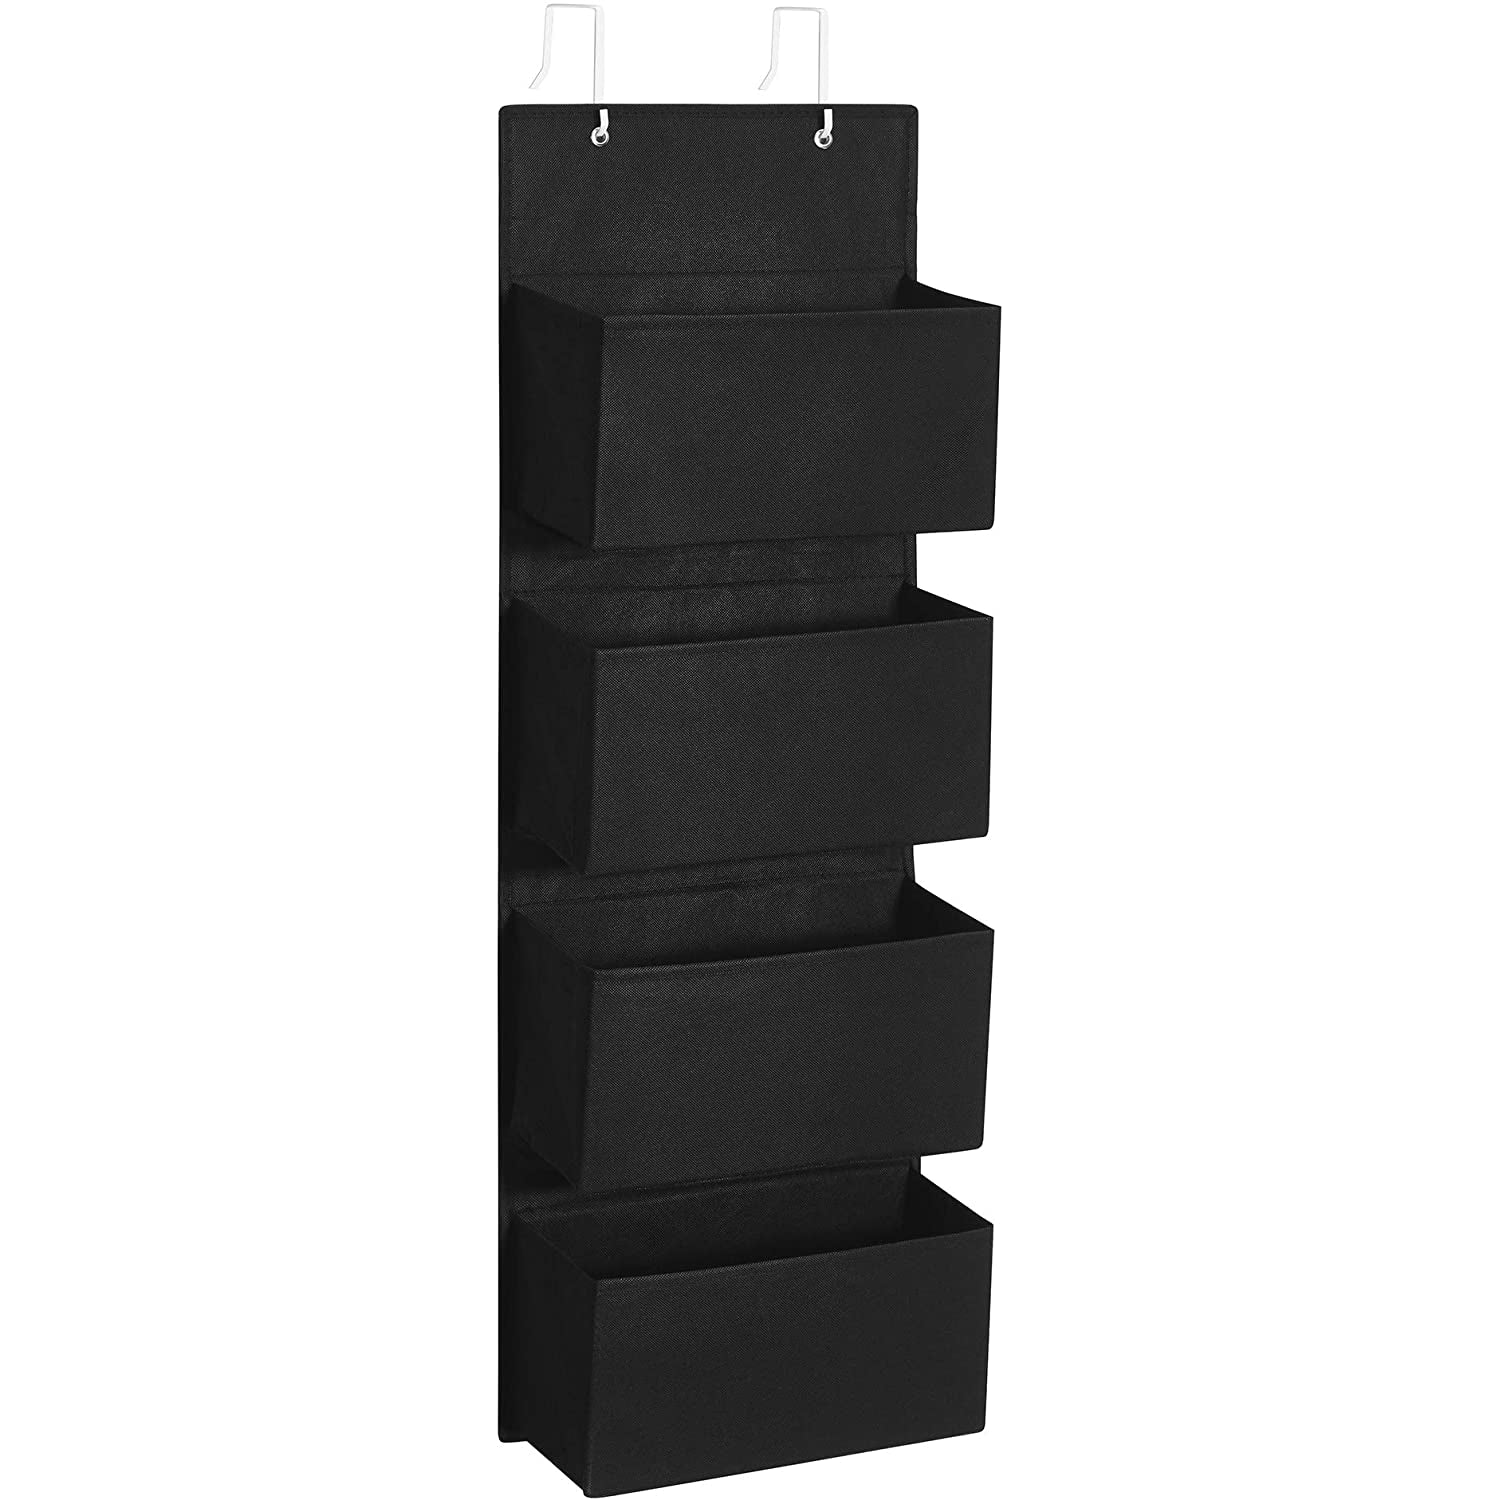 Nancy's Maricopa Organizer - Hanging Organizer - 4 Compartments - Storage - Door - Black - 33.5 x 12 x 100 cm